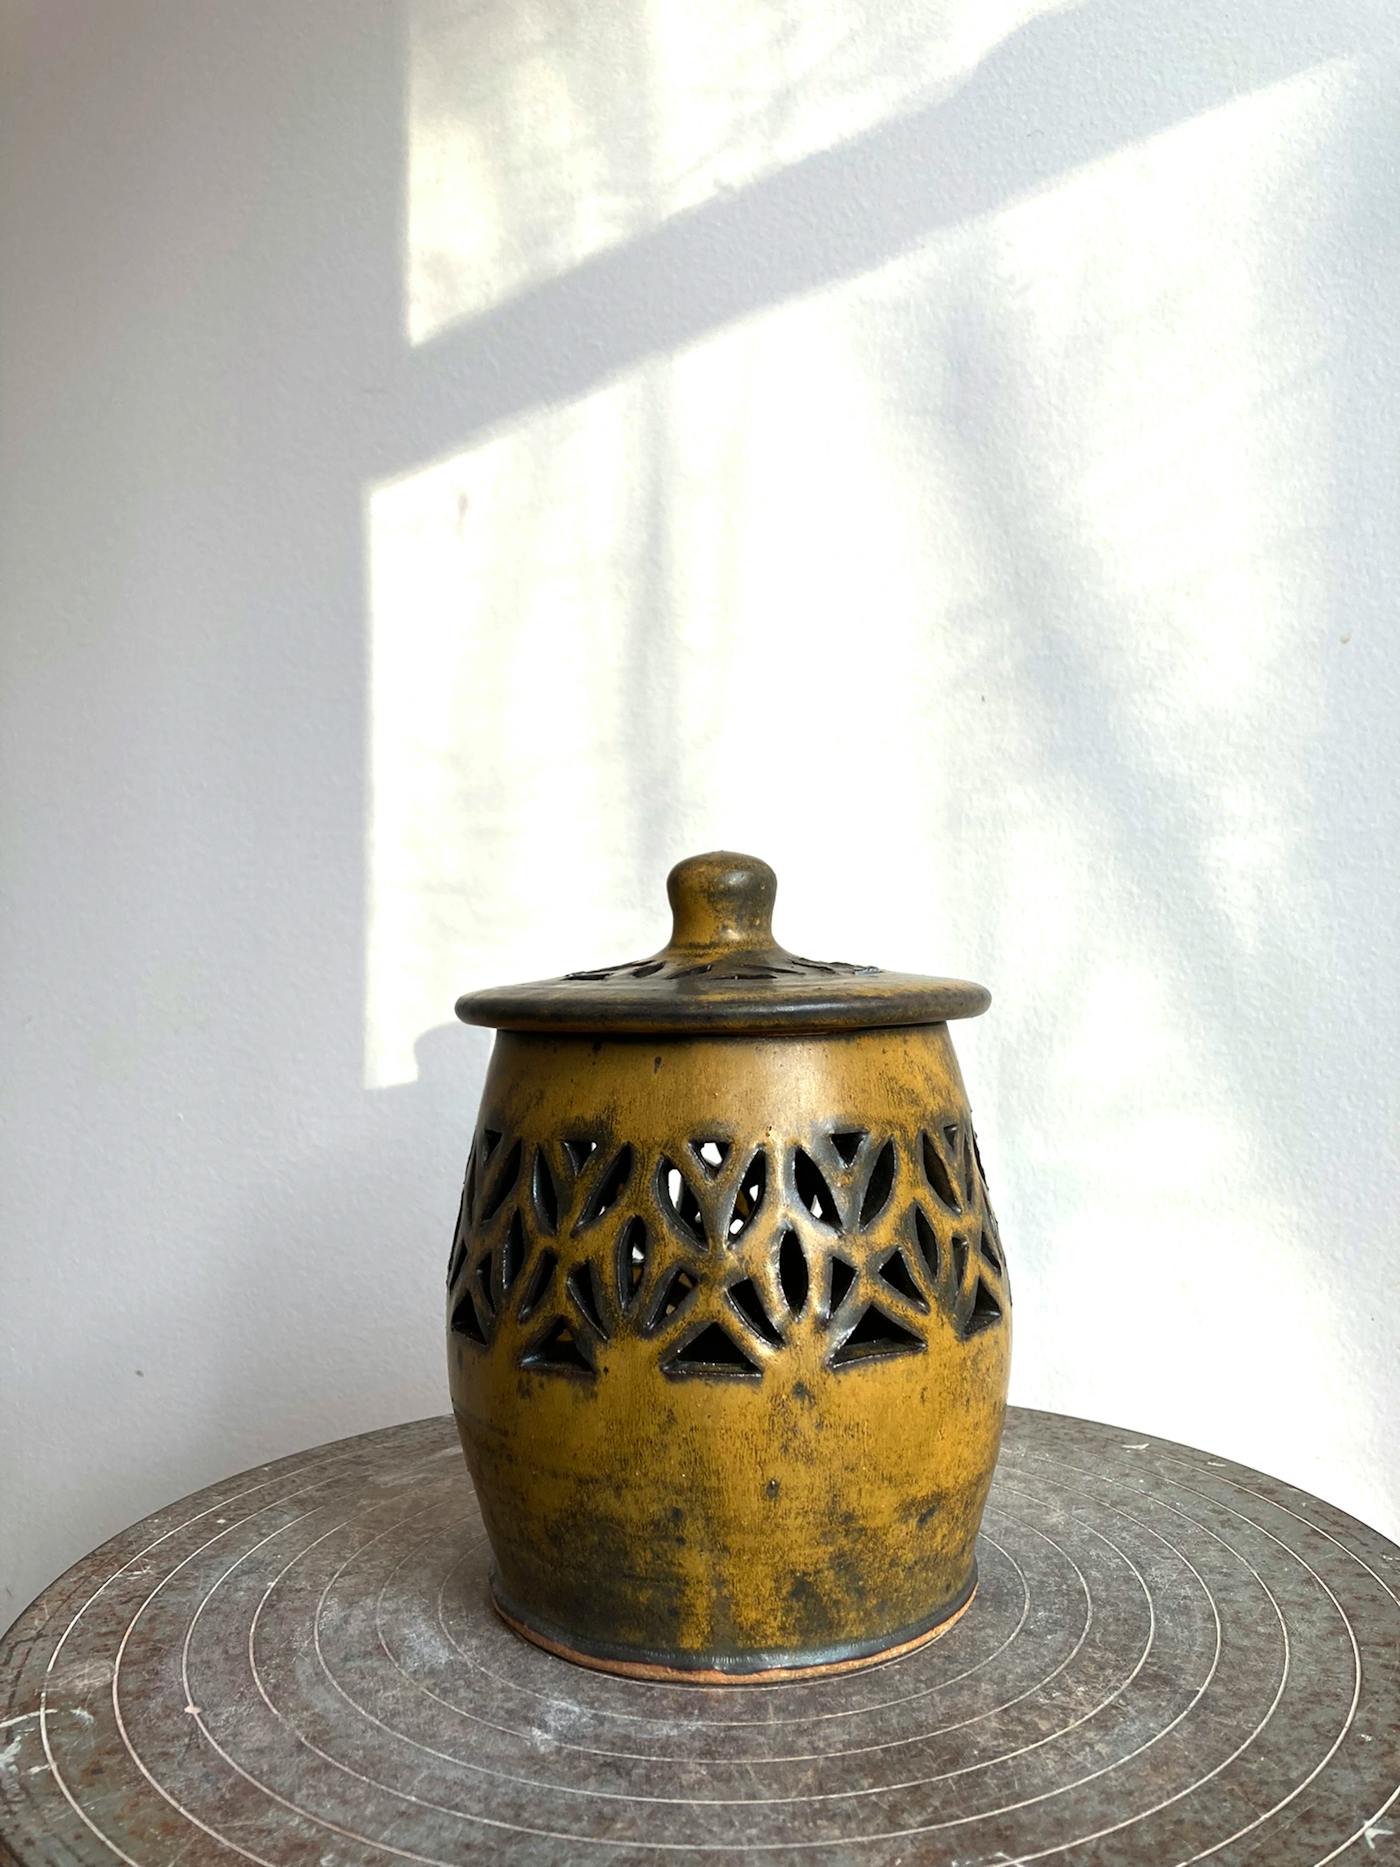 Ceramic garlic pot by Alana Cuellar